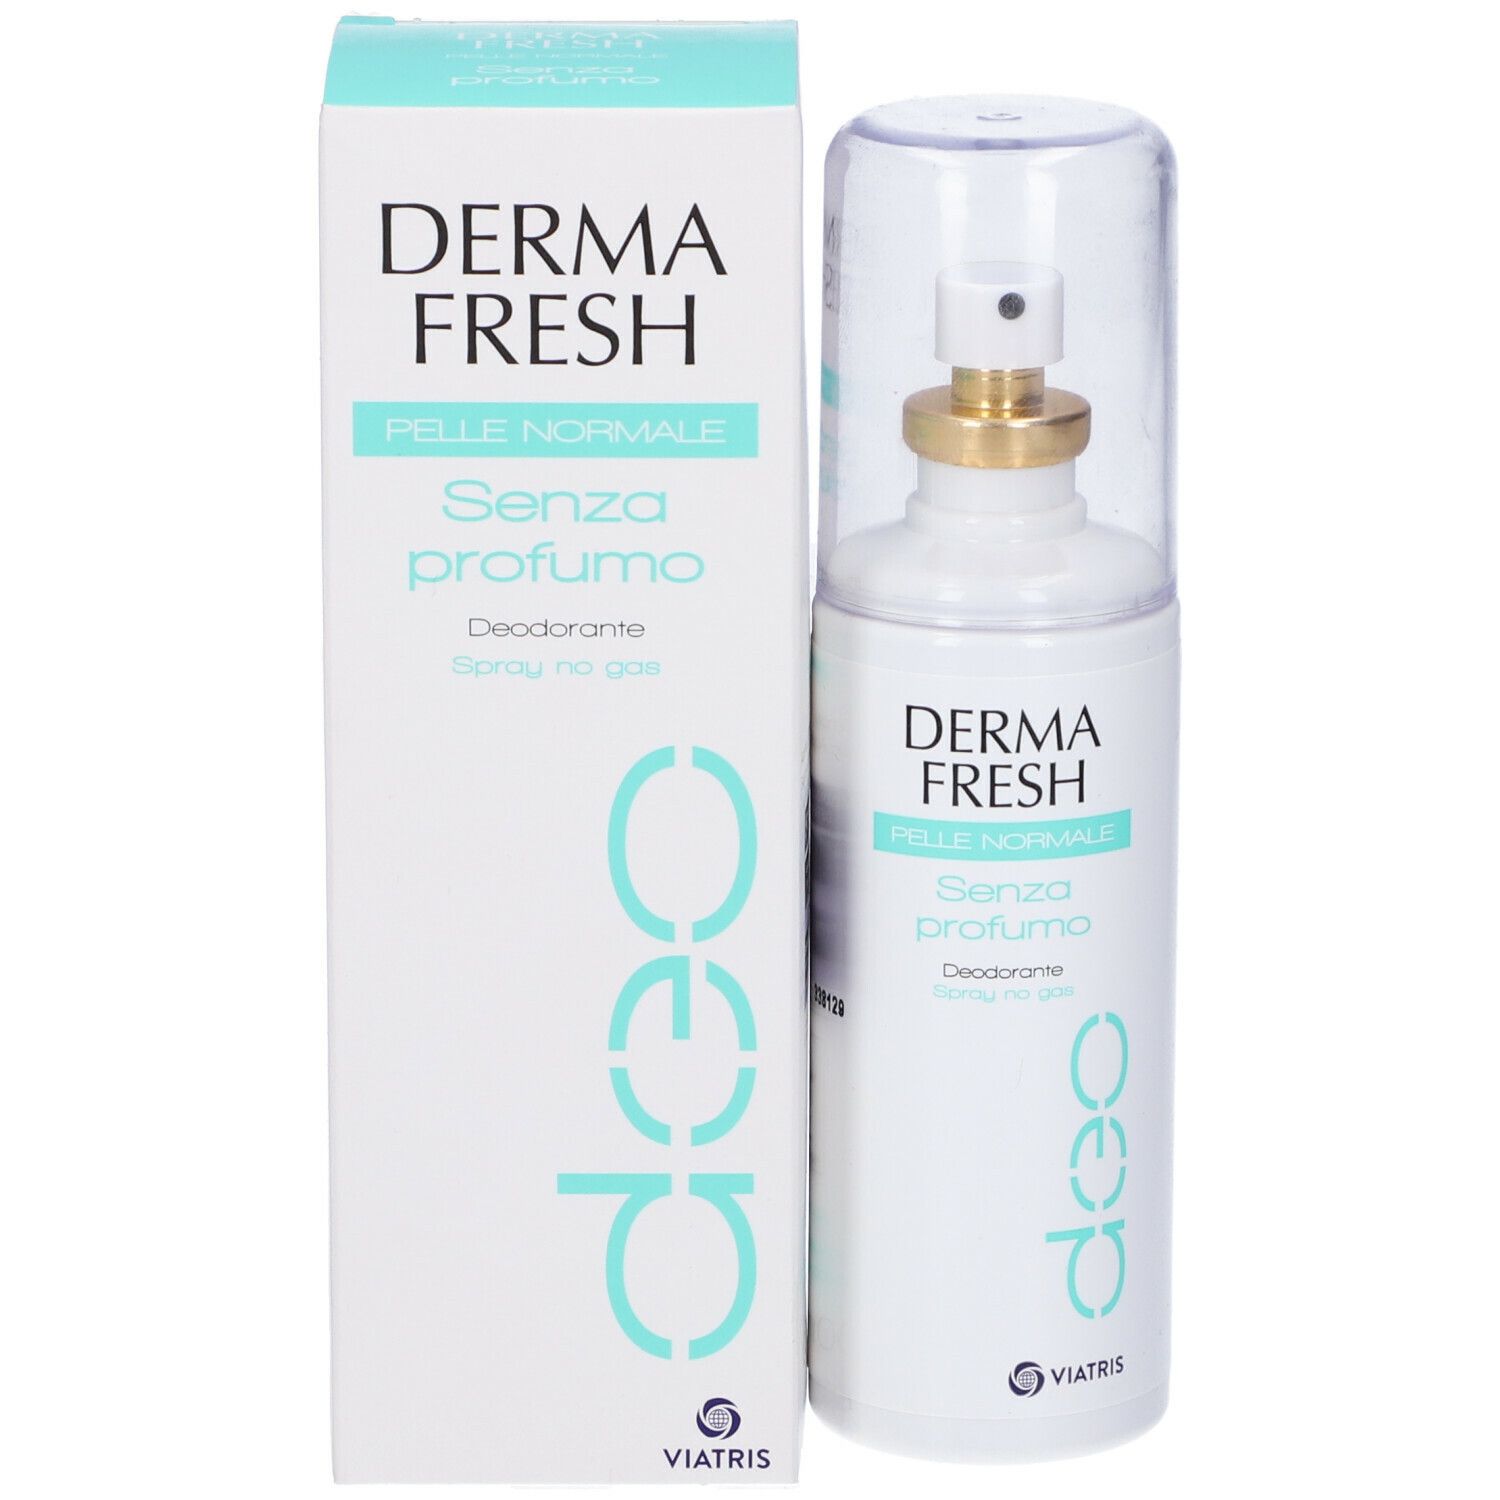 Derma Fresh Pelle Normale Spray